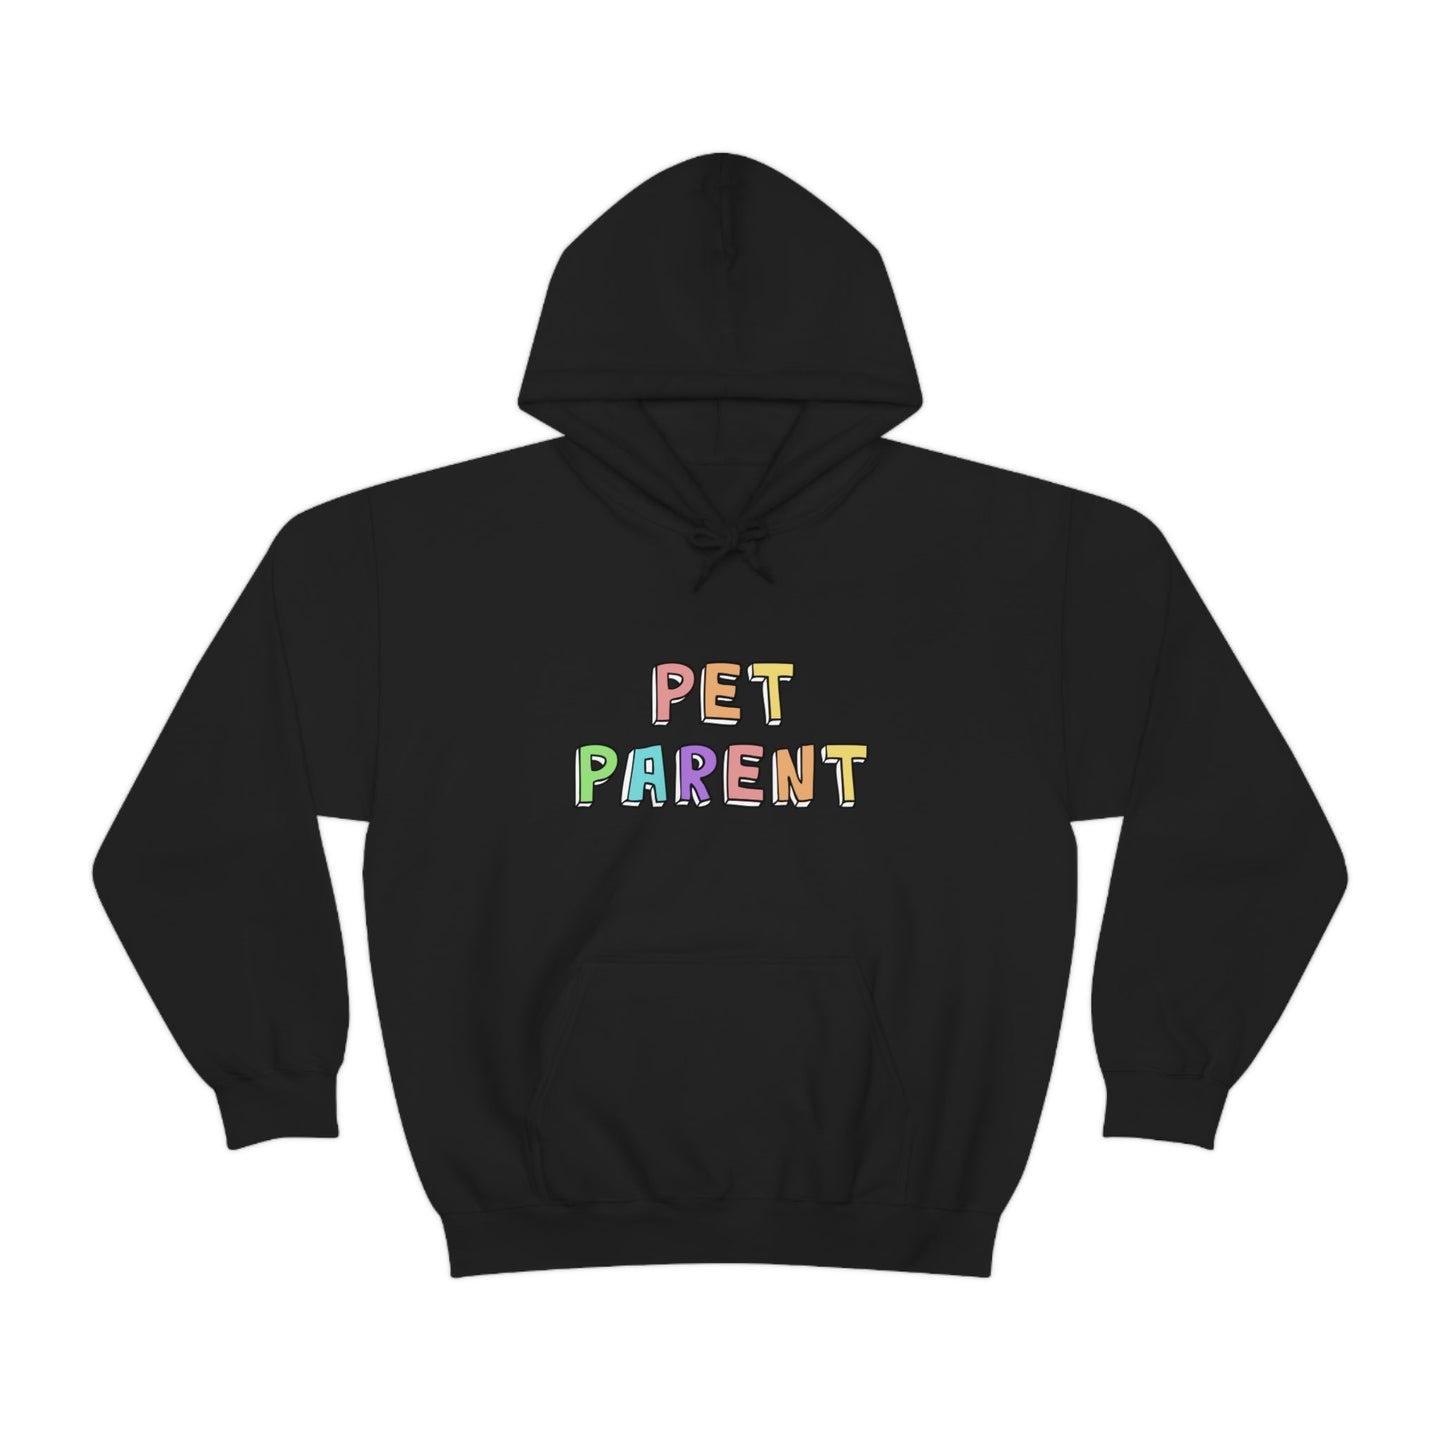 Pet Parent | Hooded Sweatshirt - Detezi Designs-13401102597770807088